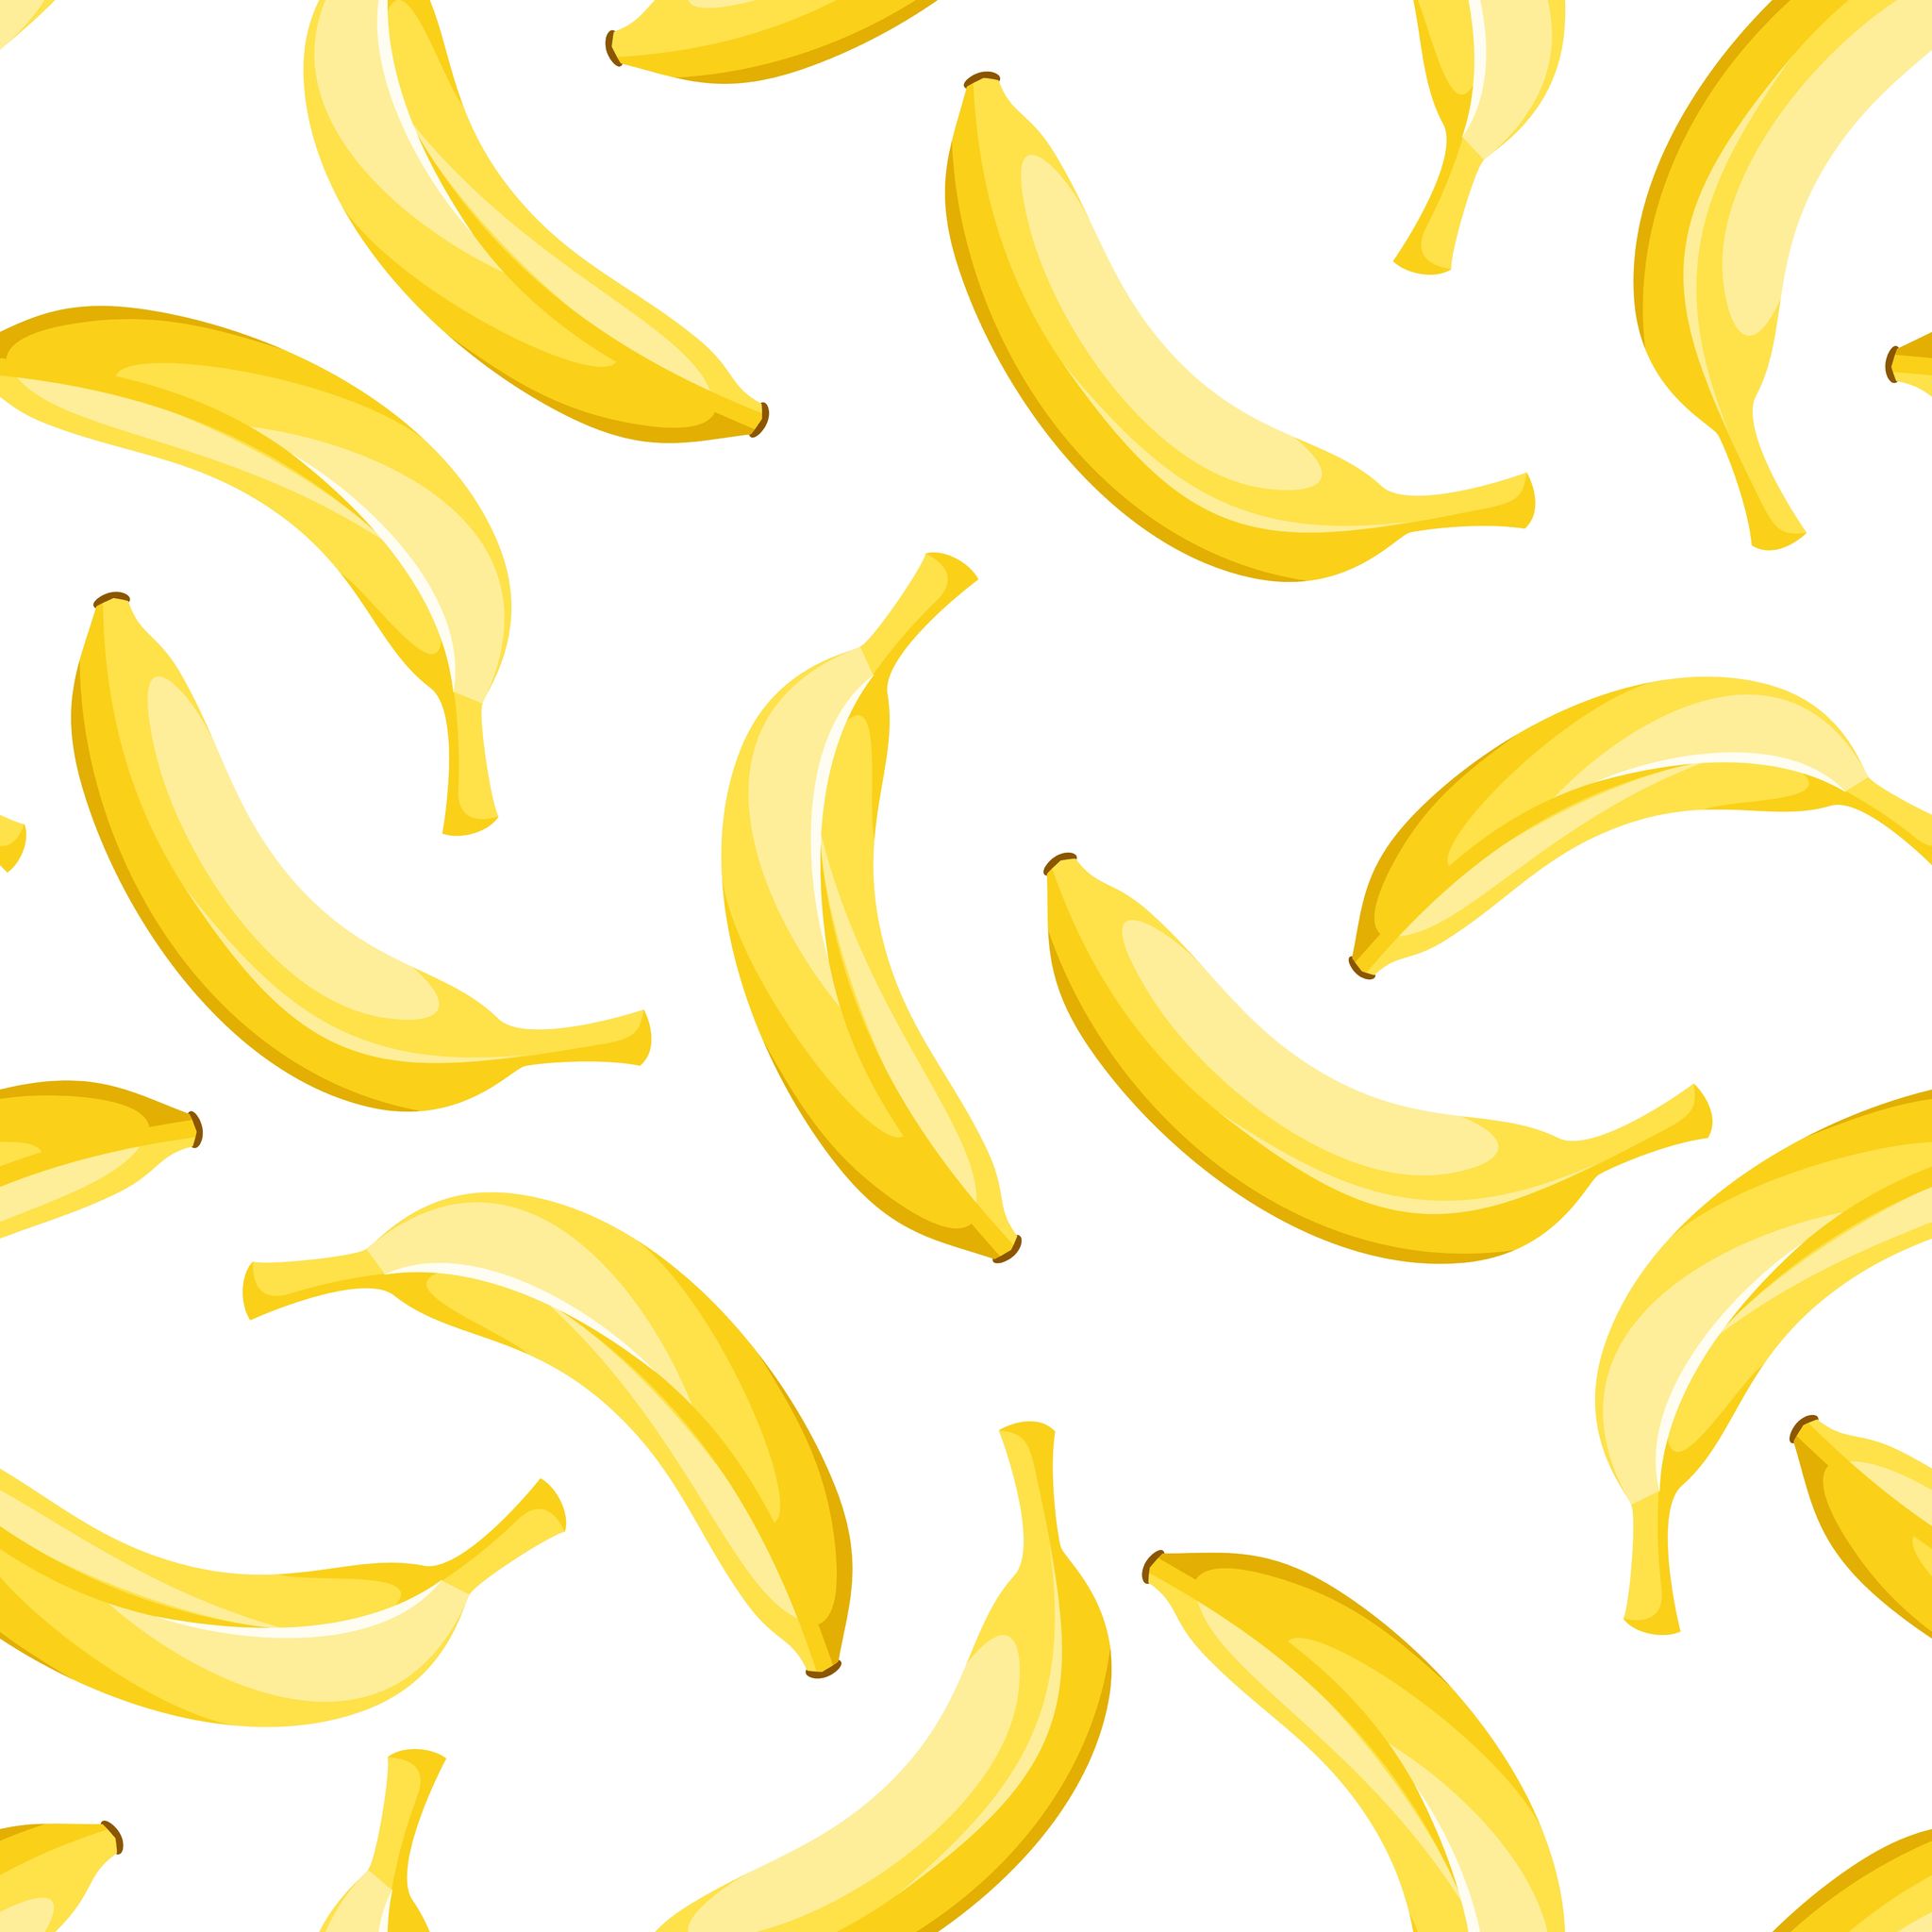 5 ways to use overripe bananas